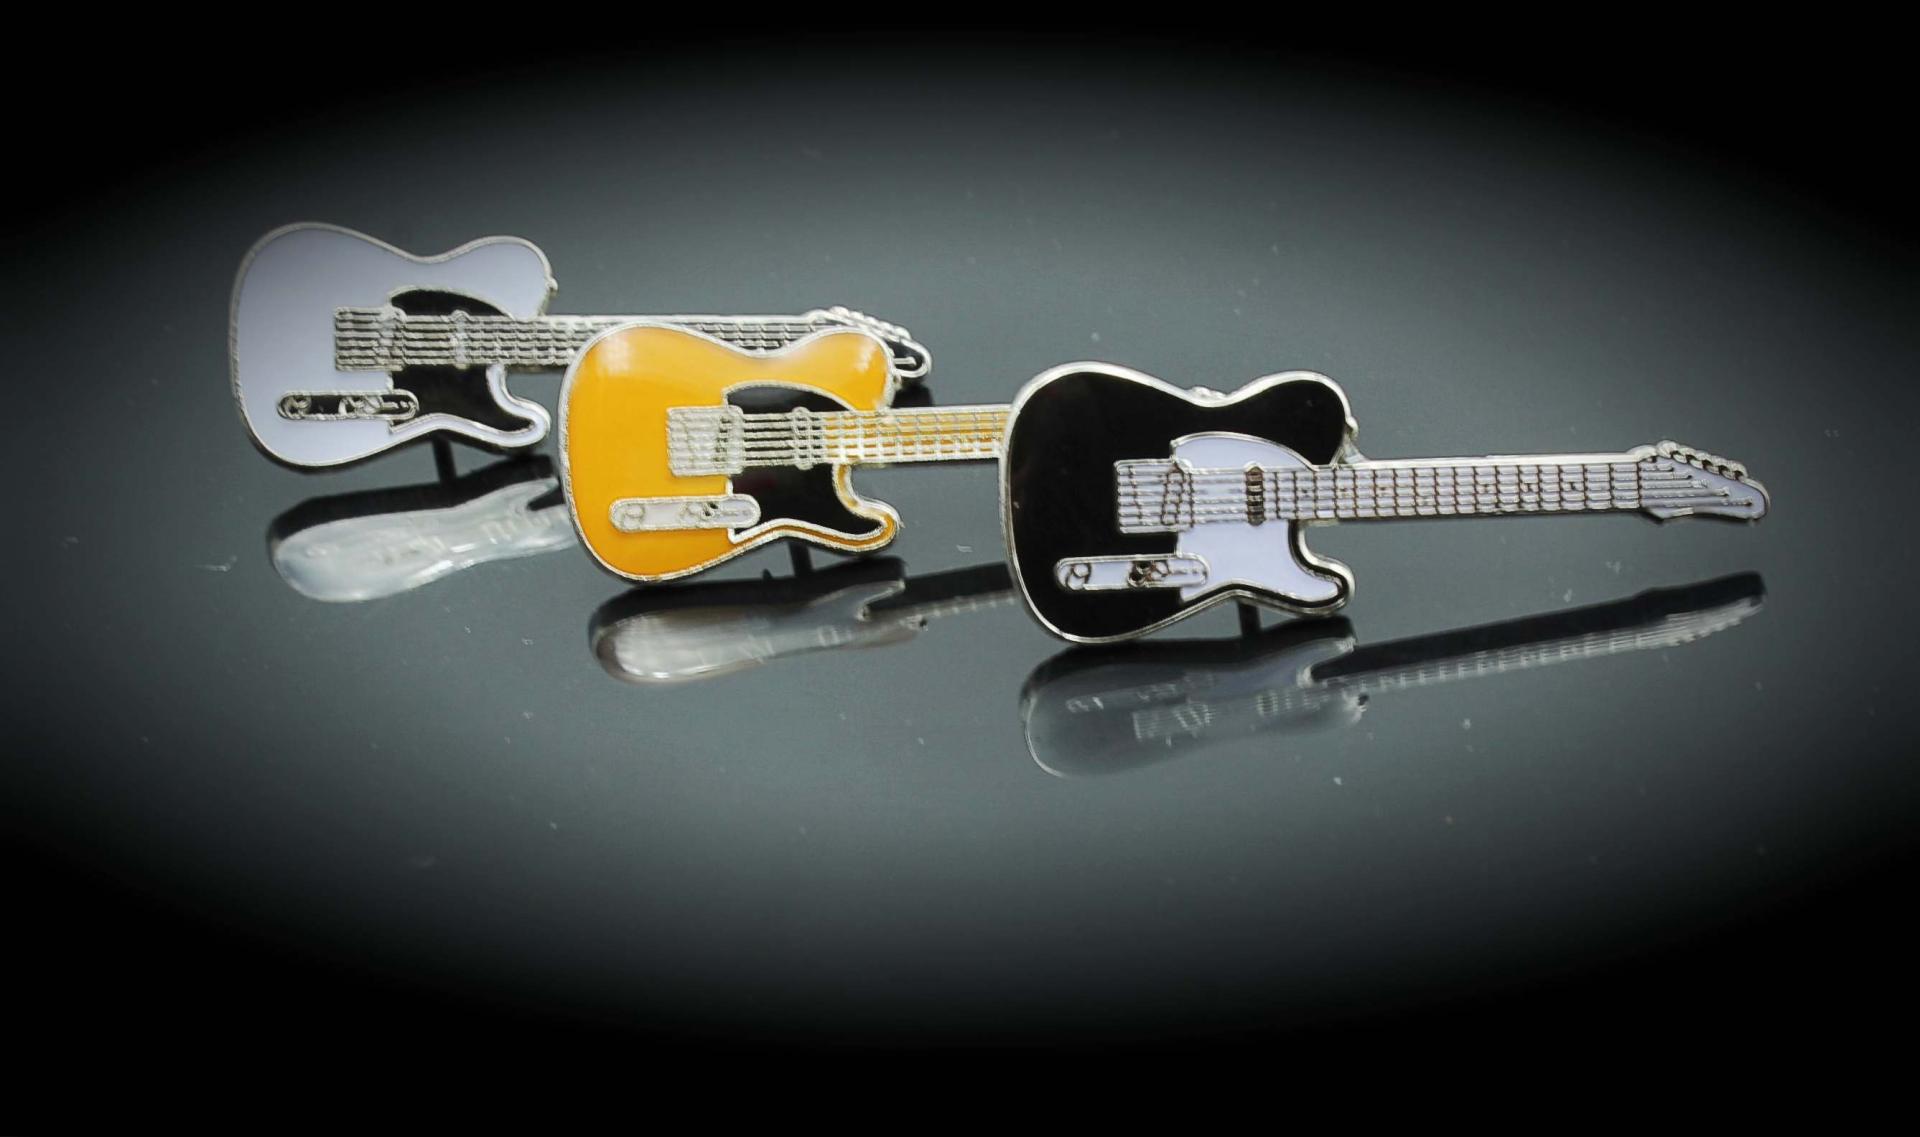 Fender Telecaster Guitar Pin - White, Yellow or Black